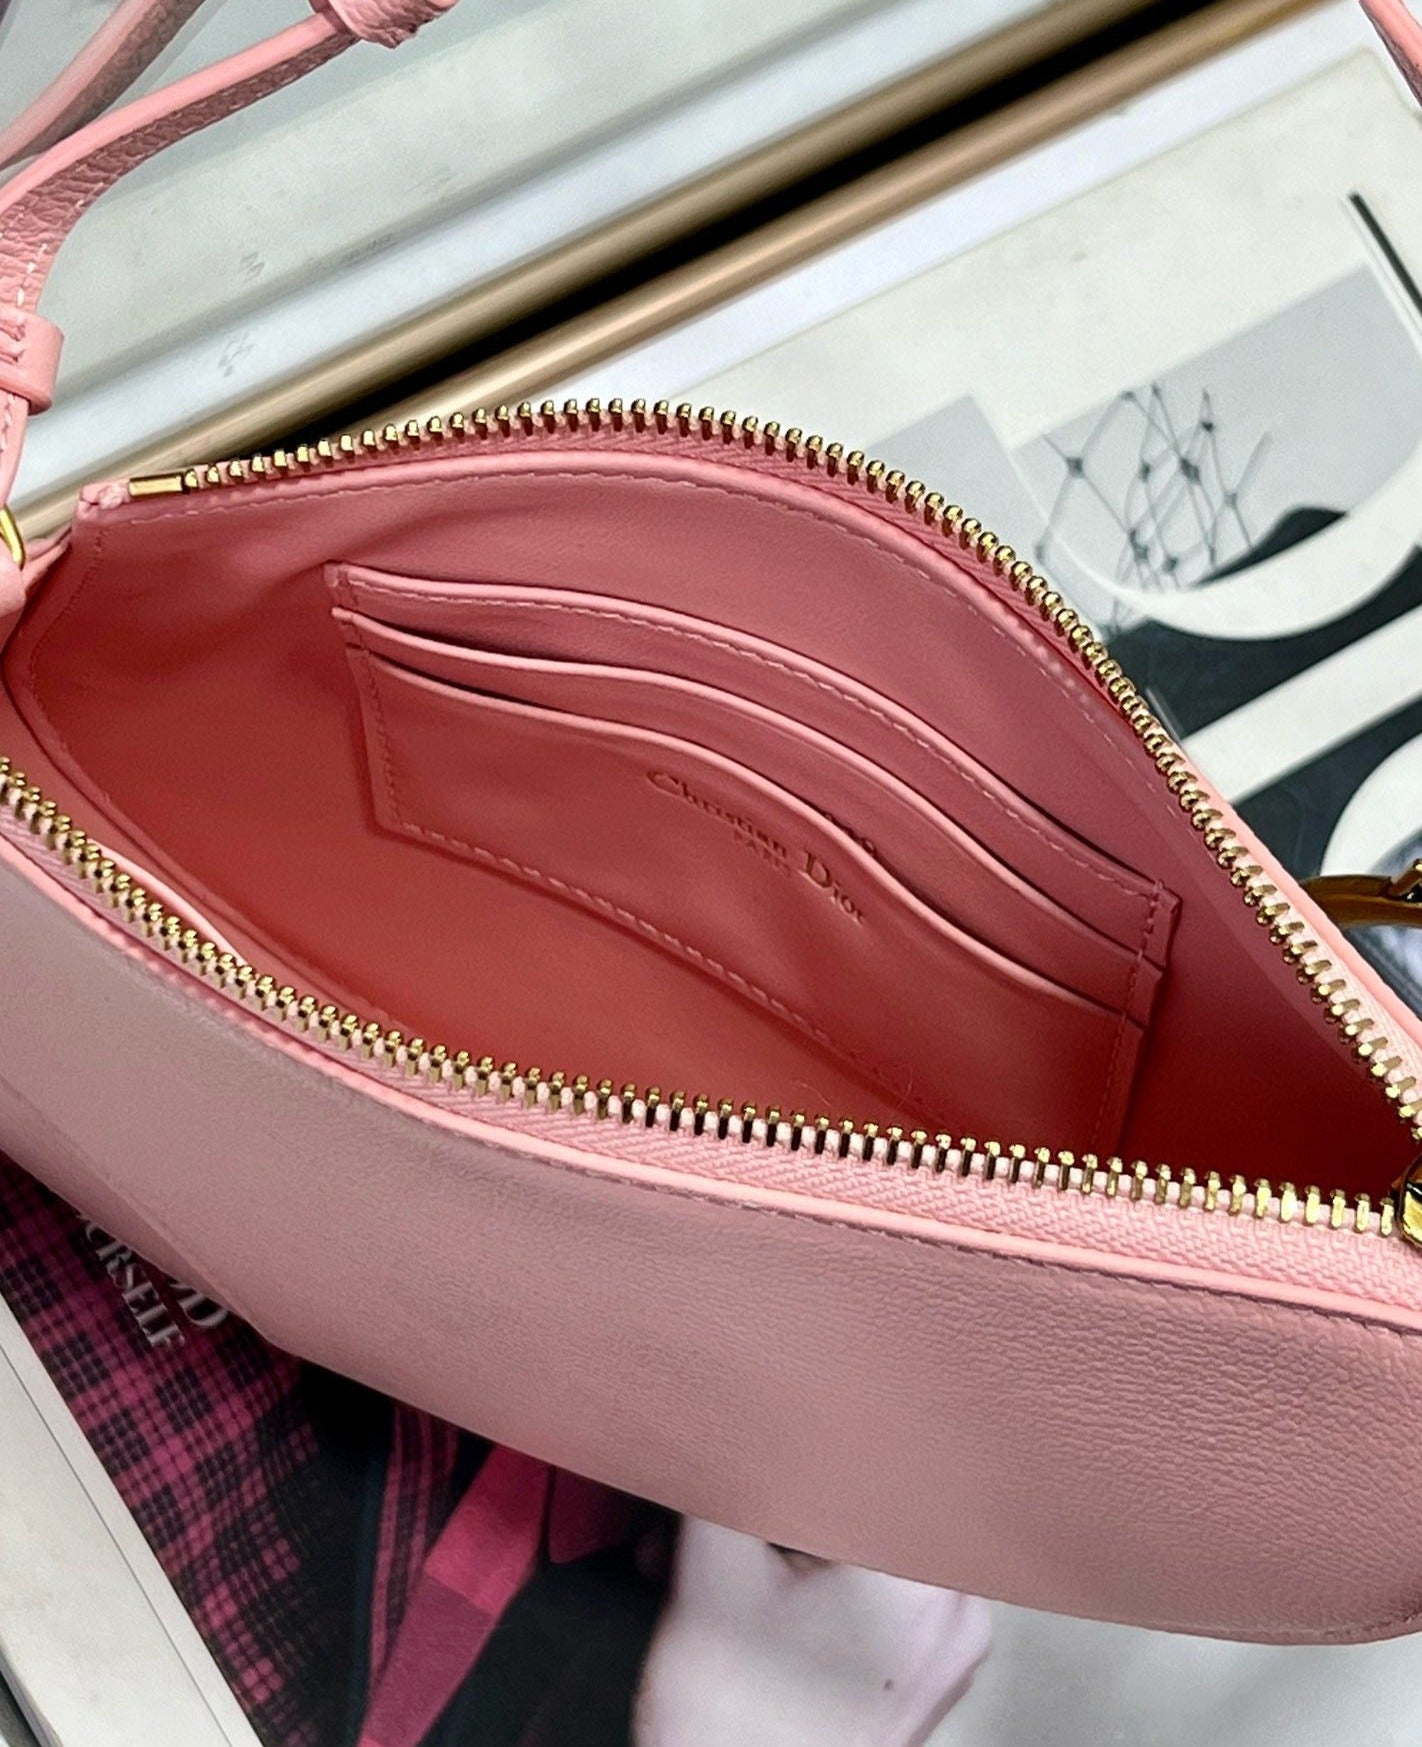 Dior Saddle leather bag